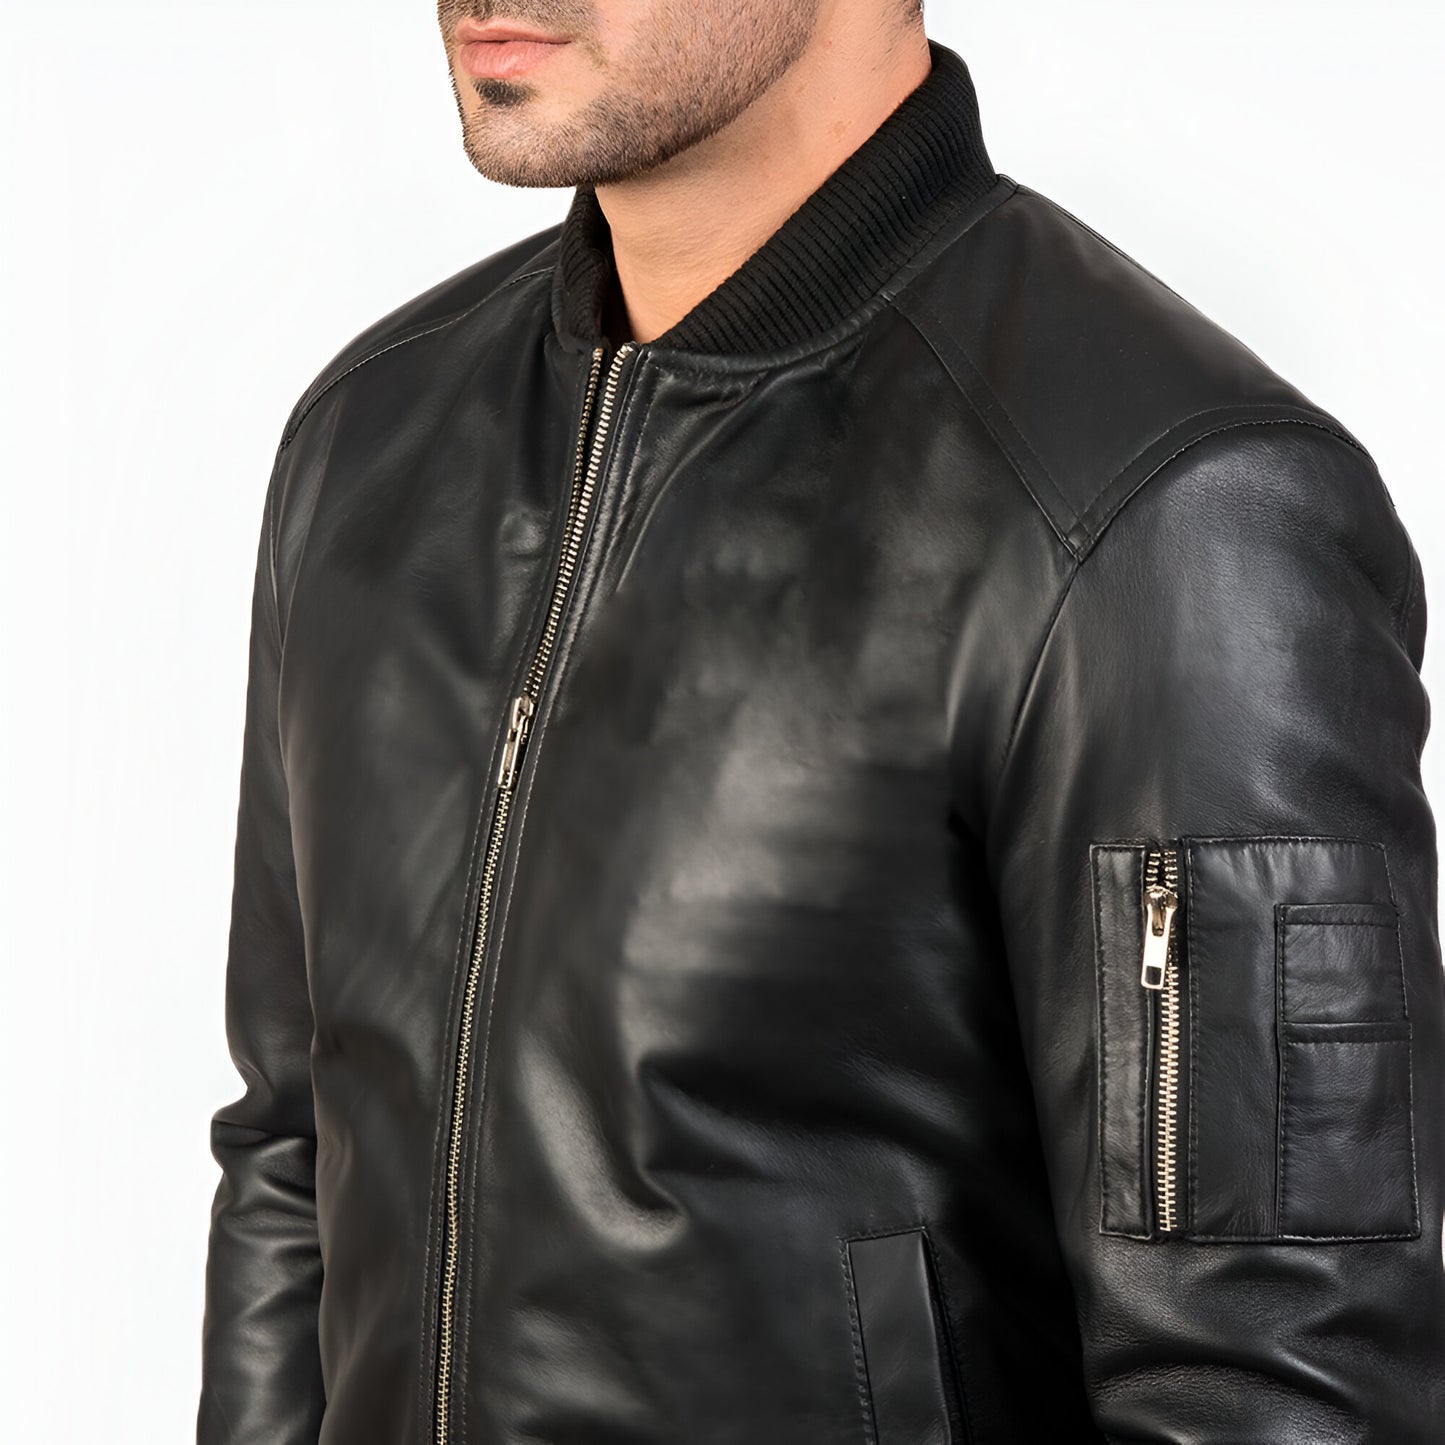 Dicks Leather Classic Black Leather Bomber Jacket